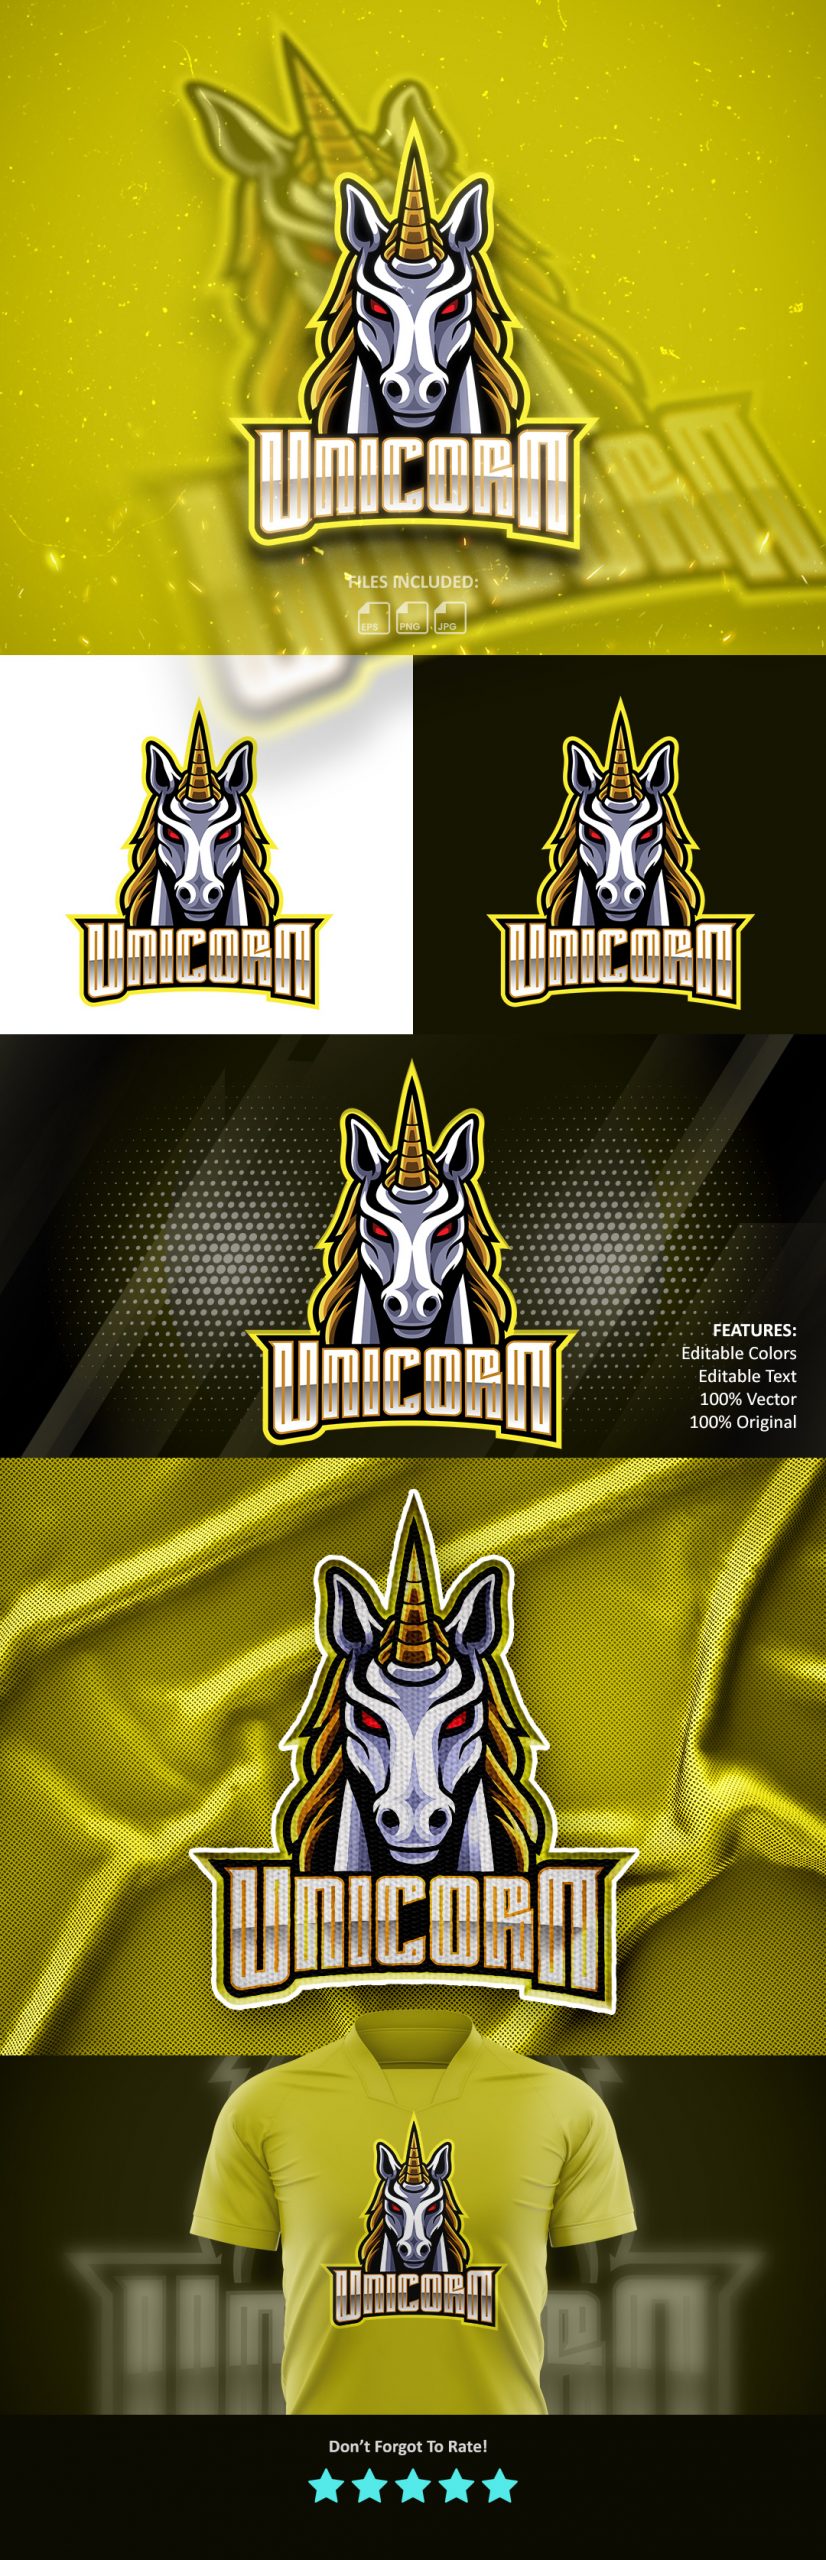 Unicorn Esports Mascot Logo Free Download